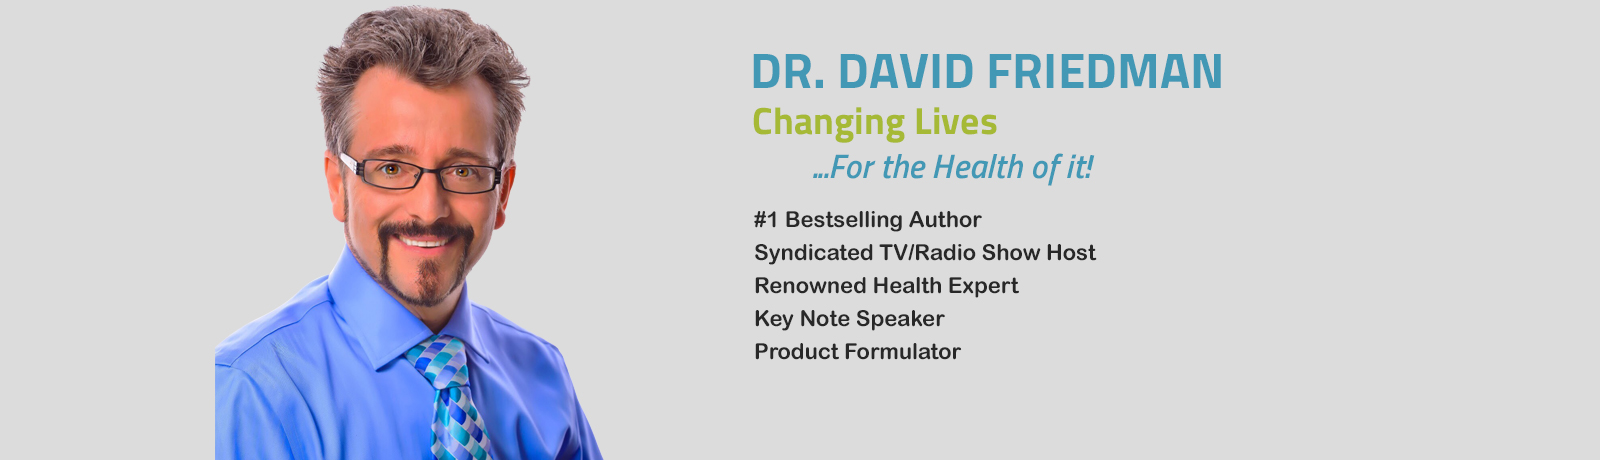 doctor david friedman